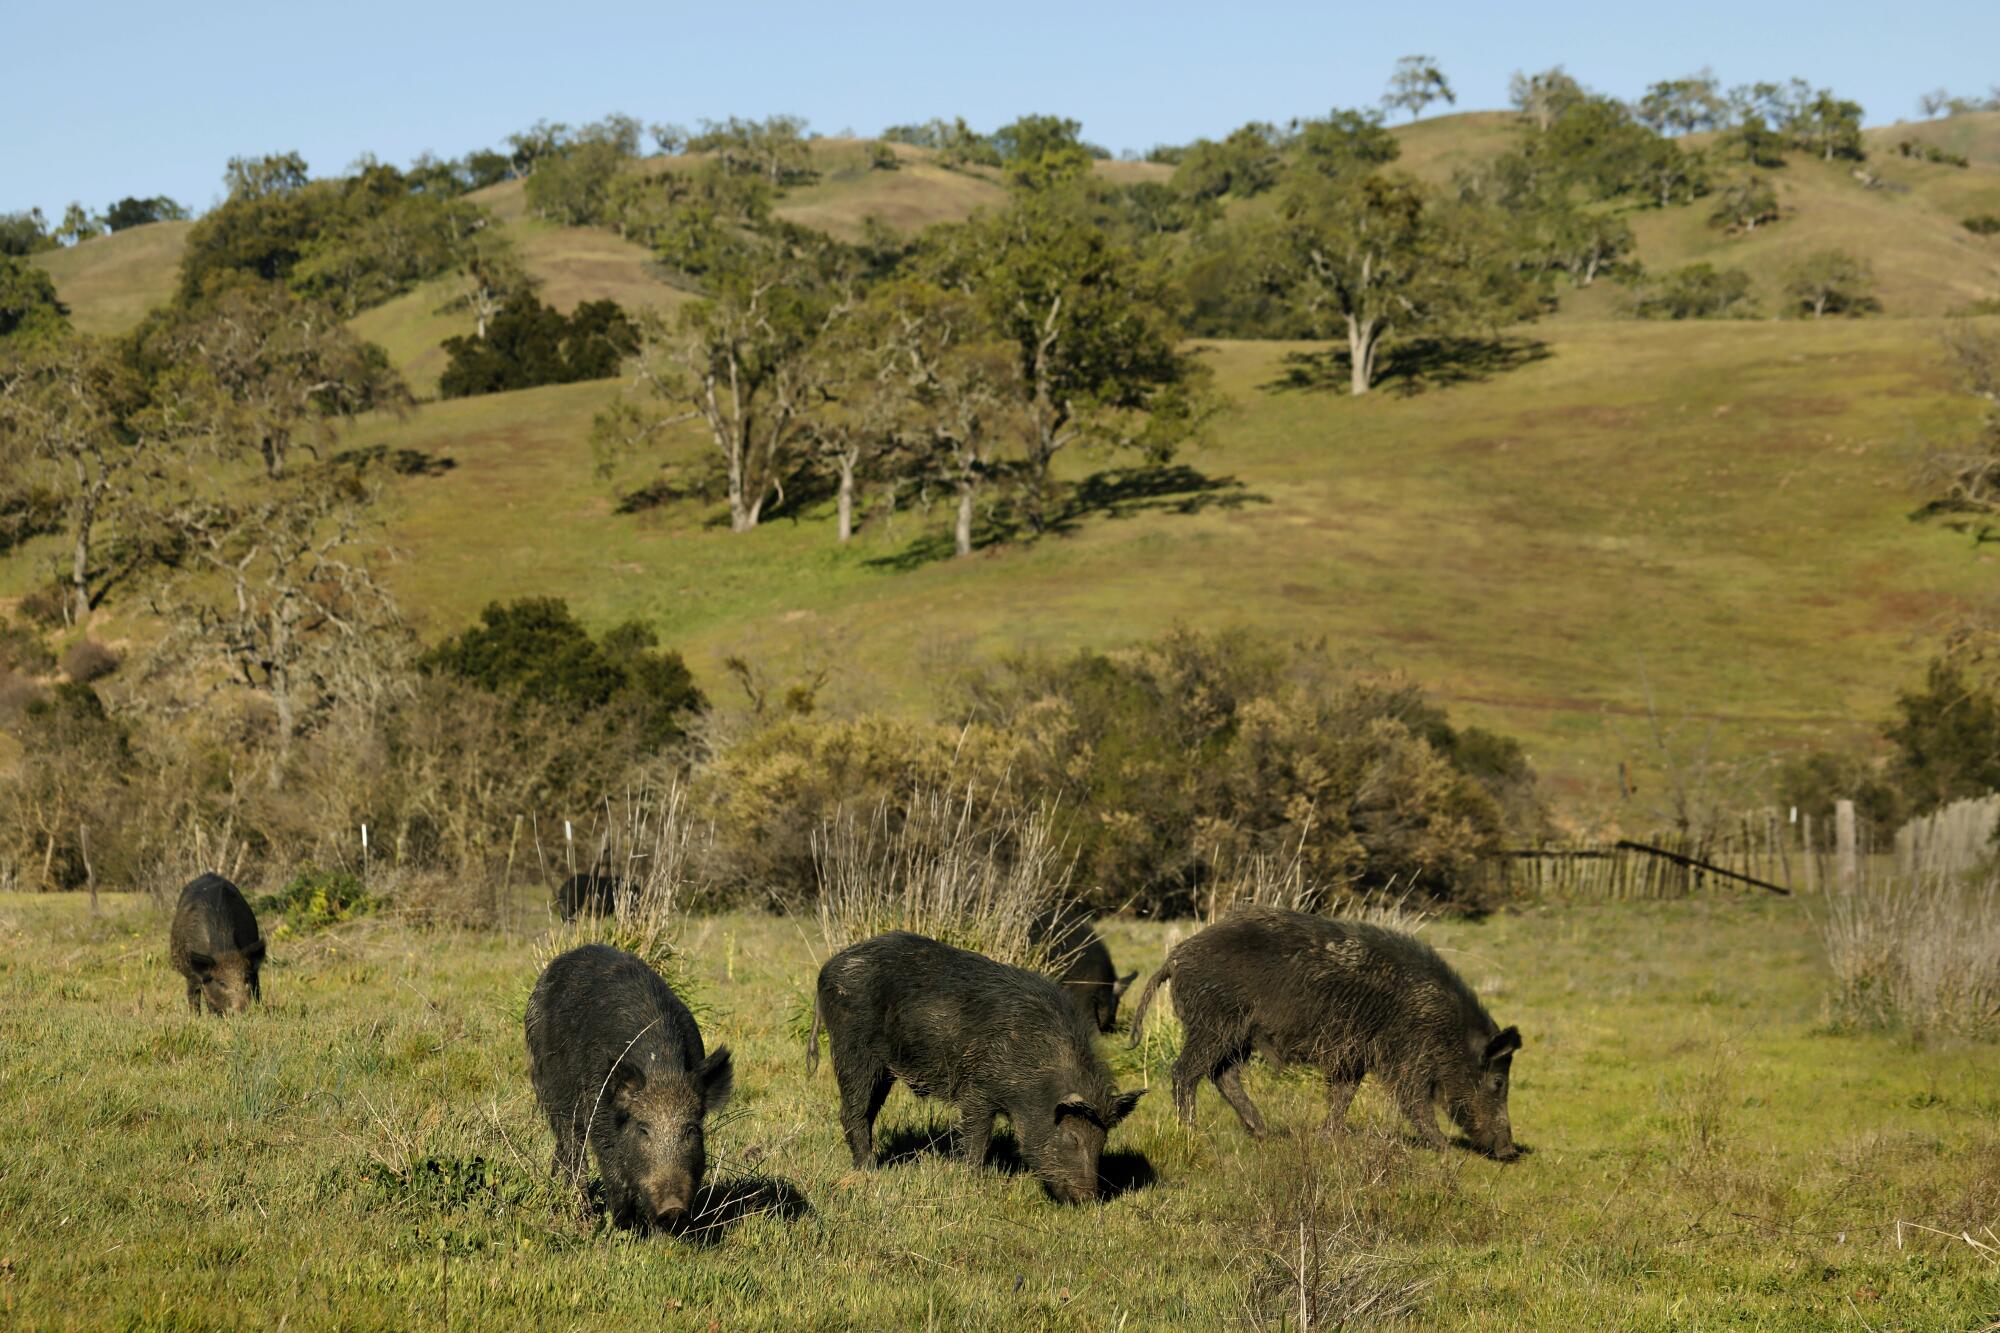 Wild pigs rummage through grass in a field